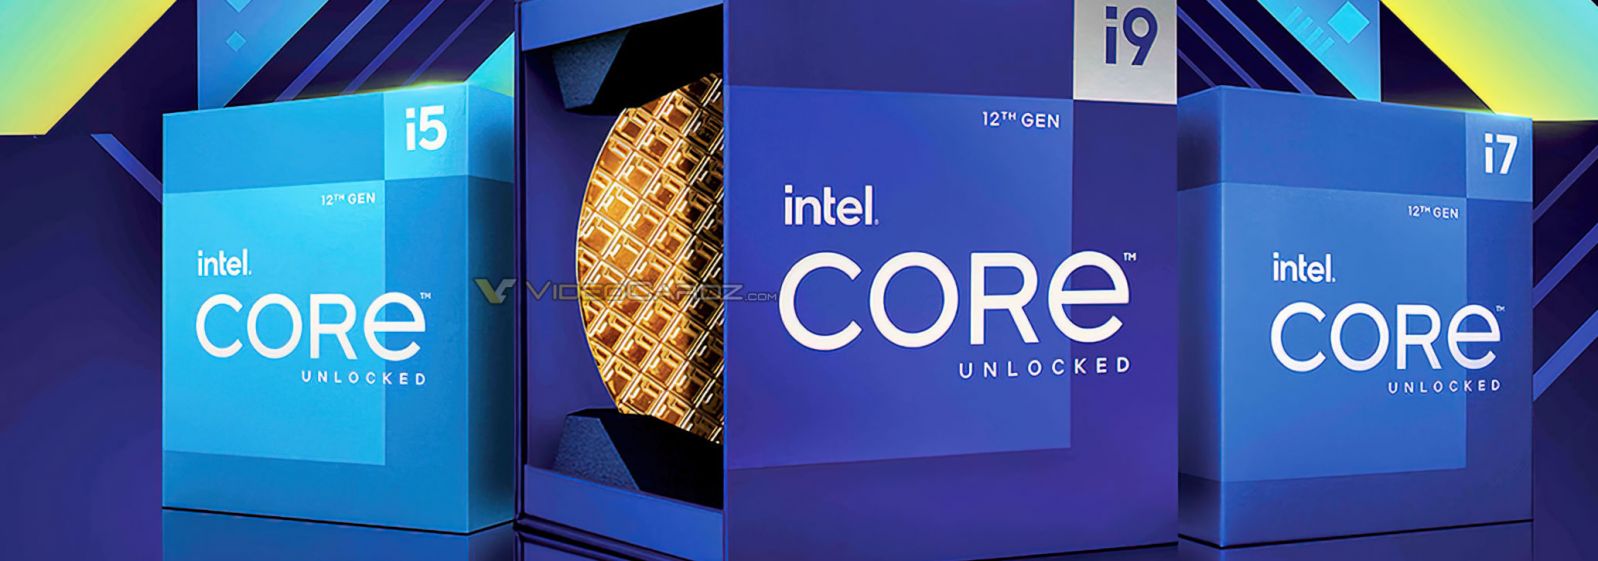 Intel-12th-Gen-Core-Alder-Lake-Banner.jpg